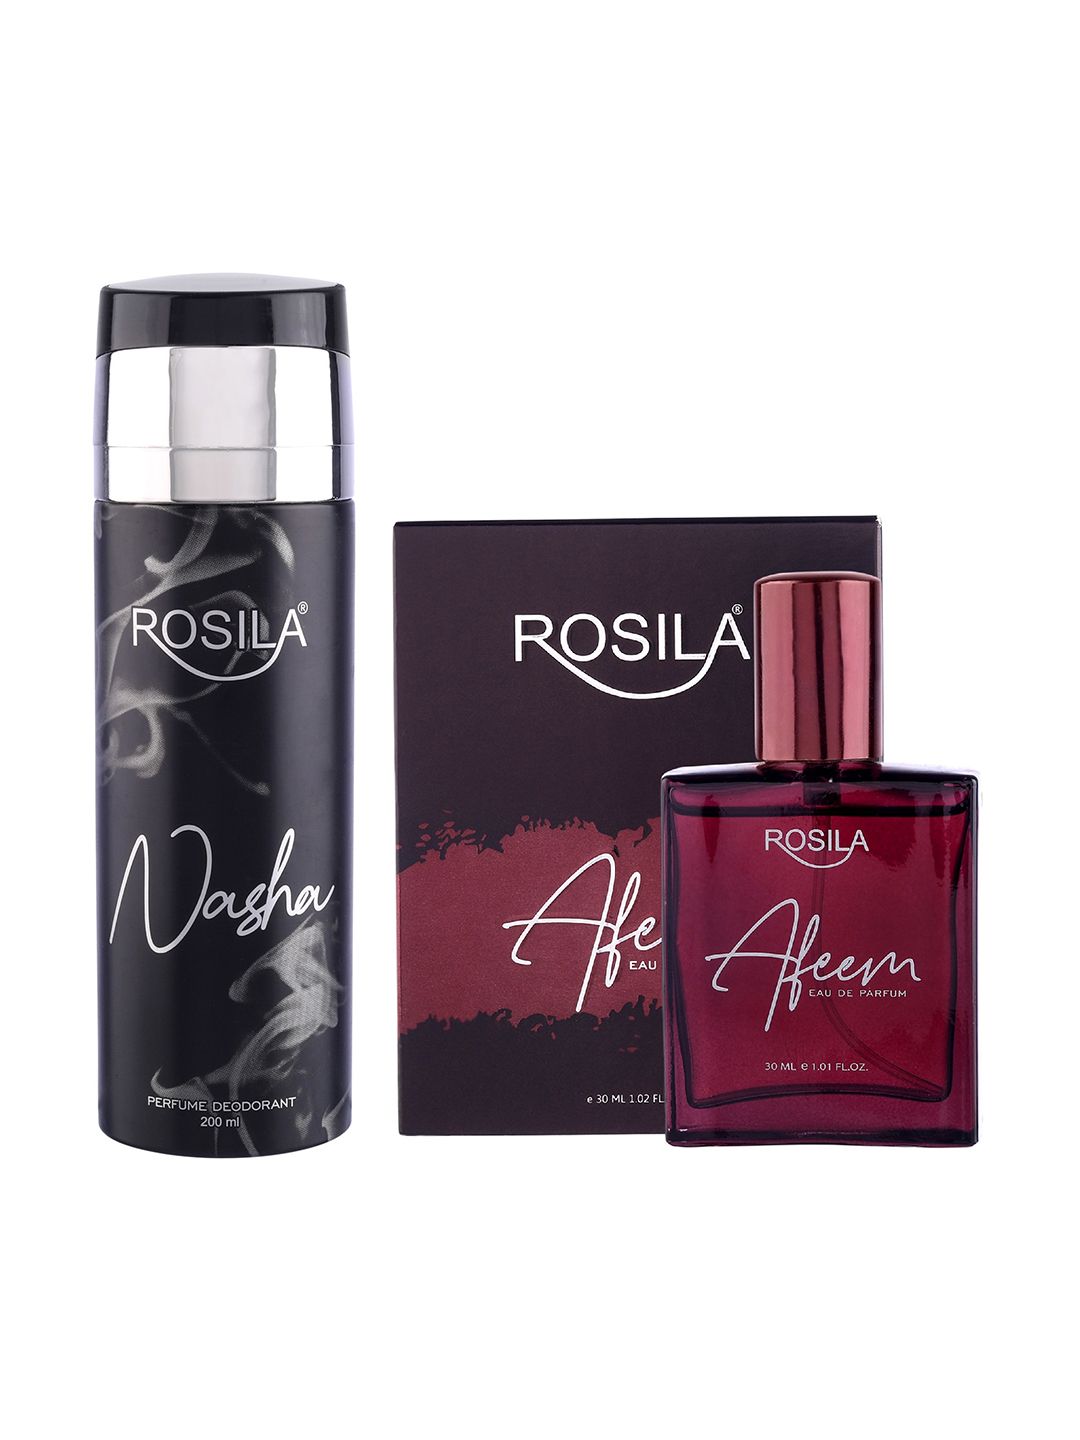 ROSILA Set of Nasha Deodorant Body Spray 200ml & Afeem Eau de Parfum 30ml Price in India